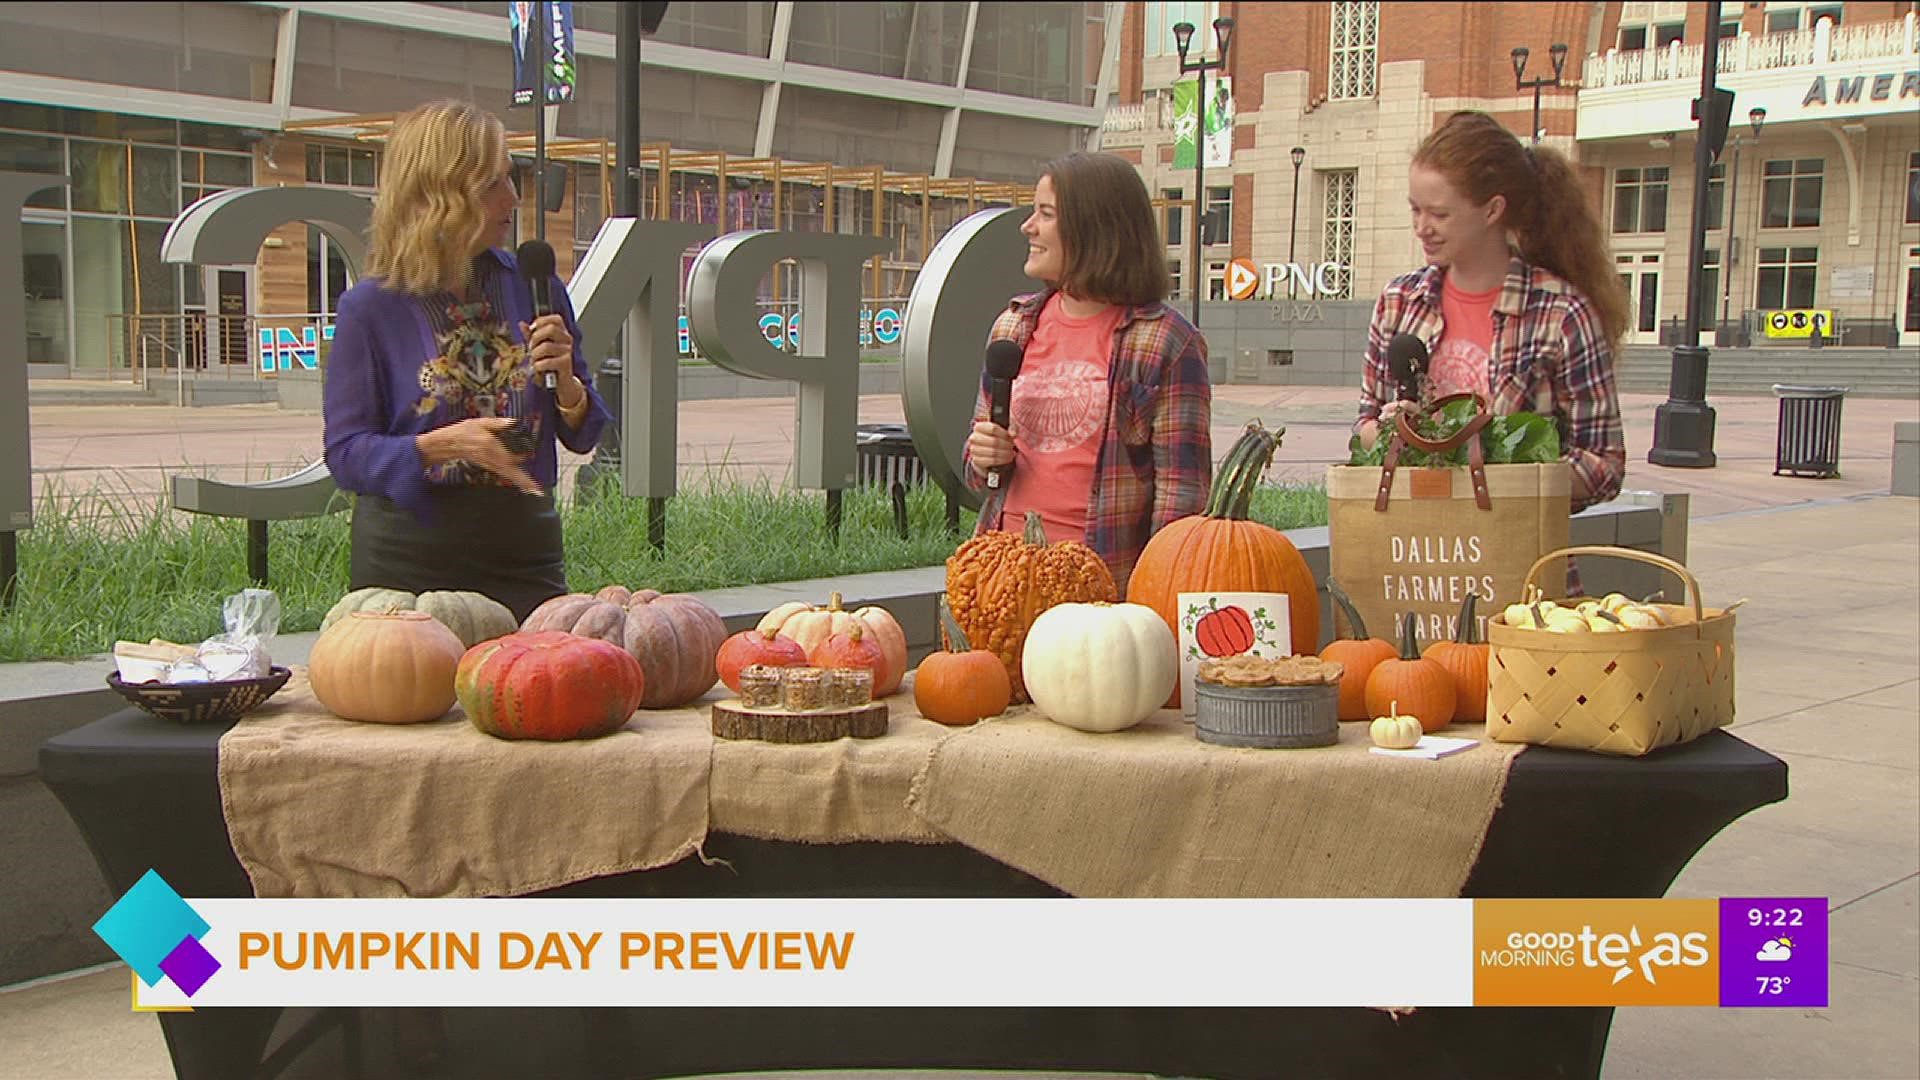 Dallas Farmer's Market celebrates Texas Pumpkin Day on October 16